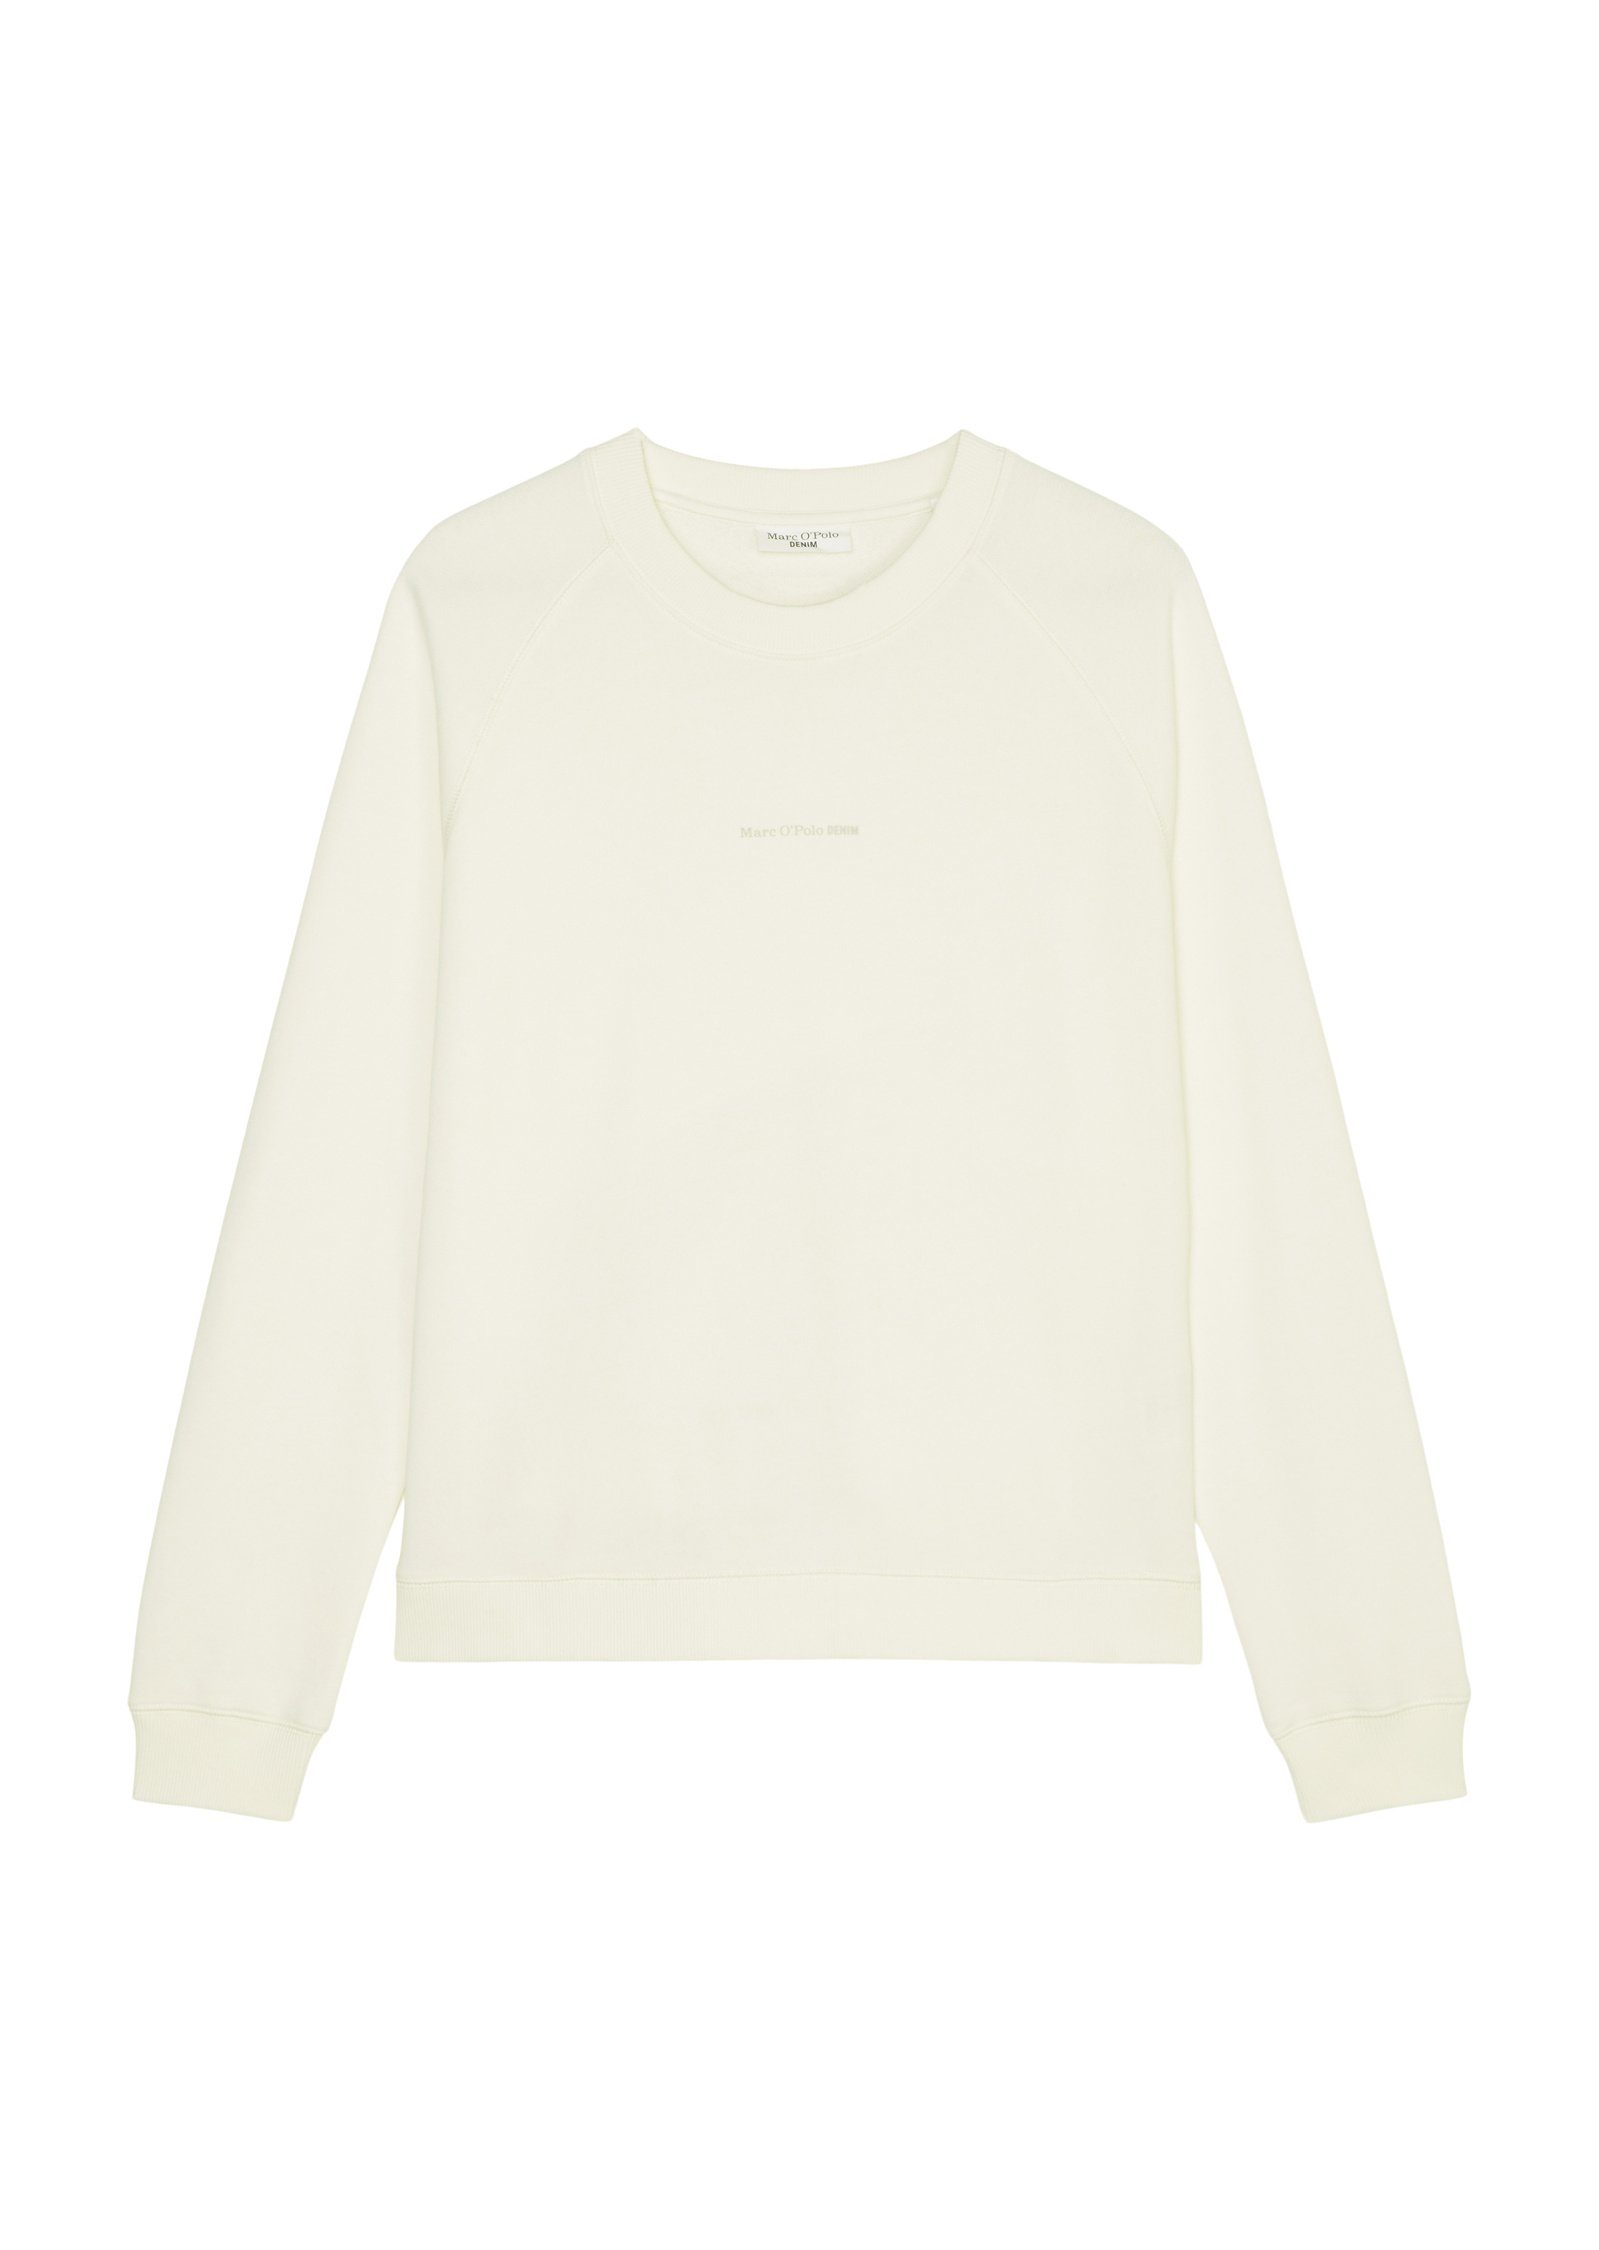 Marc O'Polo DENIM Sweatshirt Cotton-Qualität Organic aus white